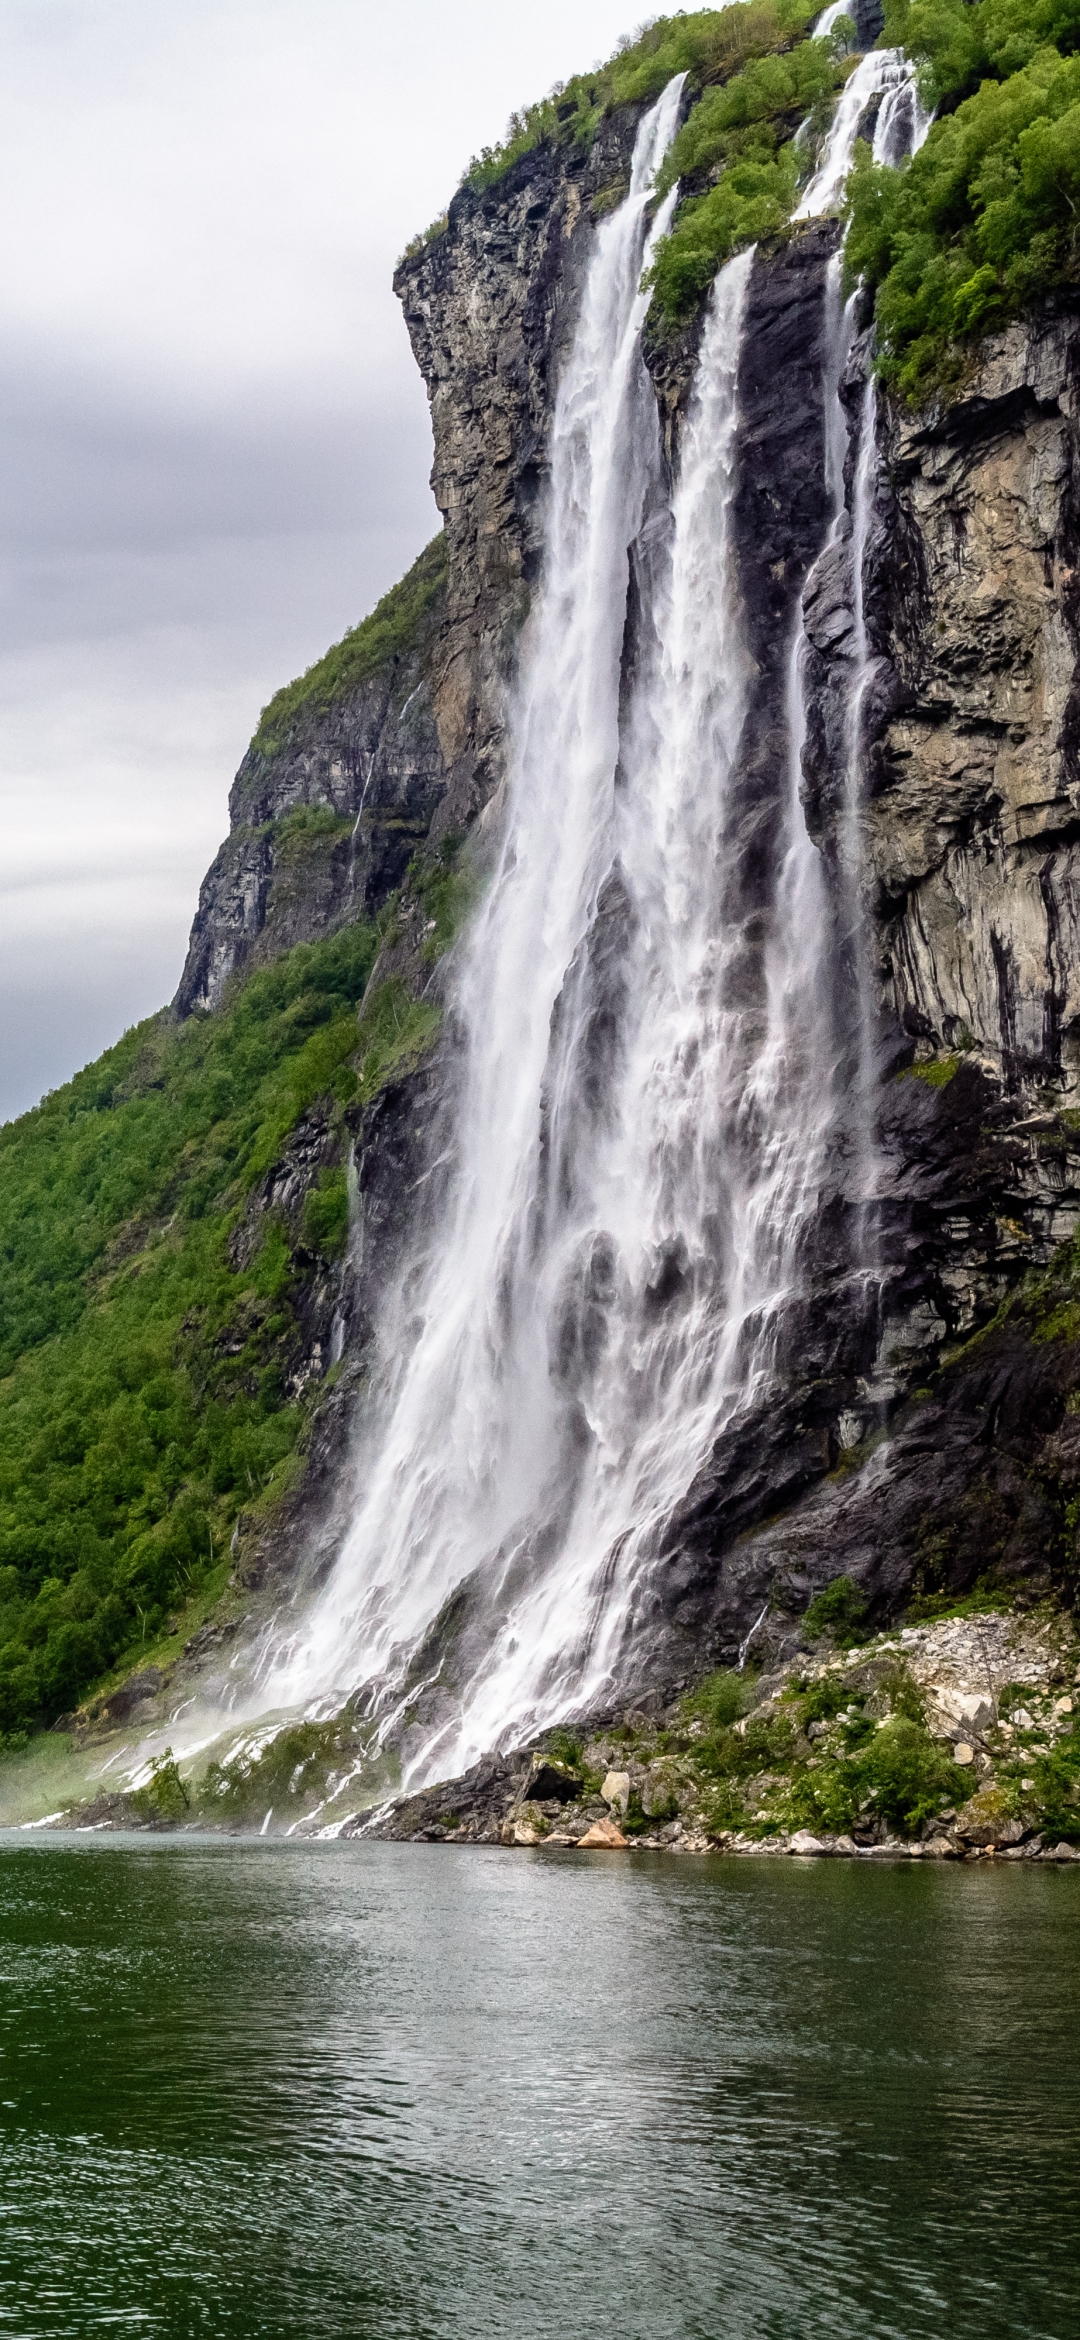 Baixar papel de parede para celular de Natureza, Cachoeiras, Montanha, Noruega, Terra/natureza, Cachoeira gratuito.